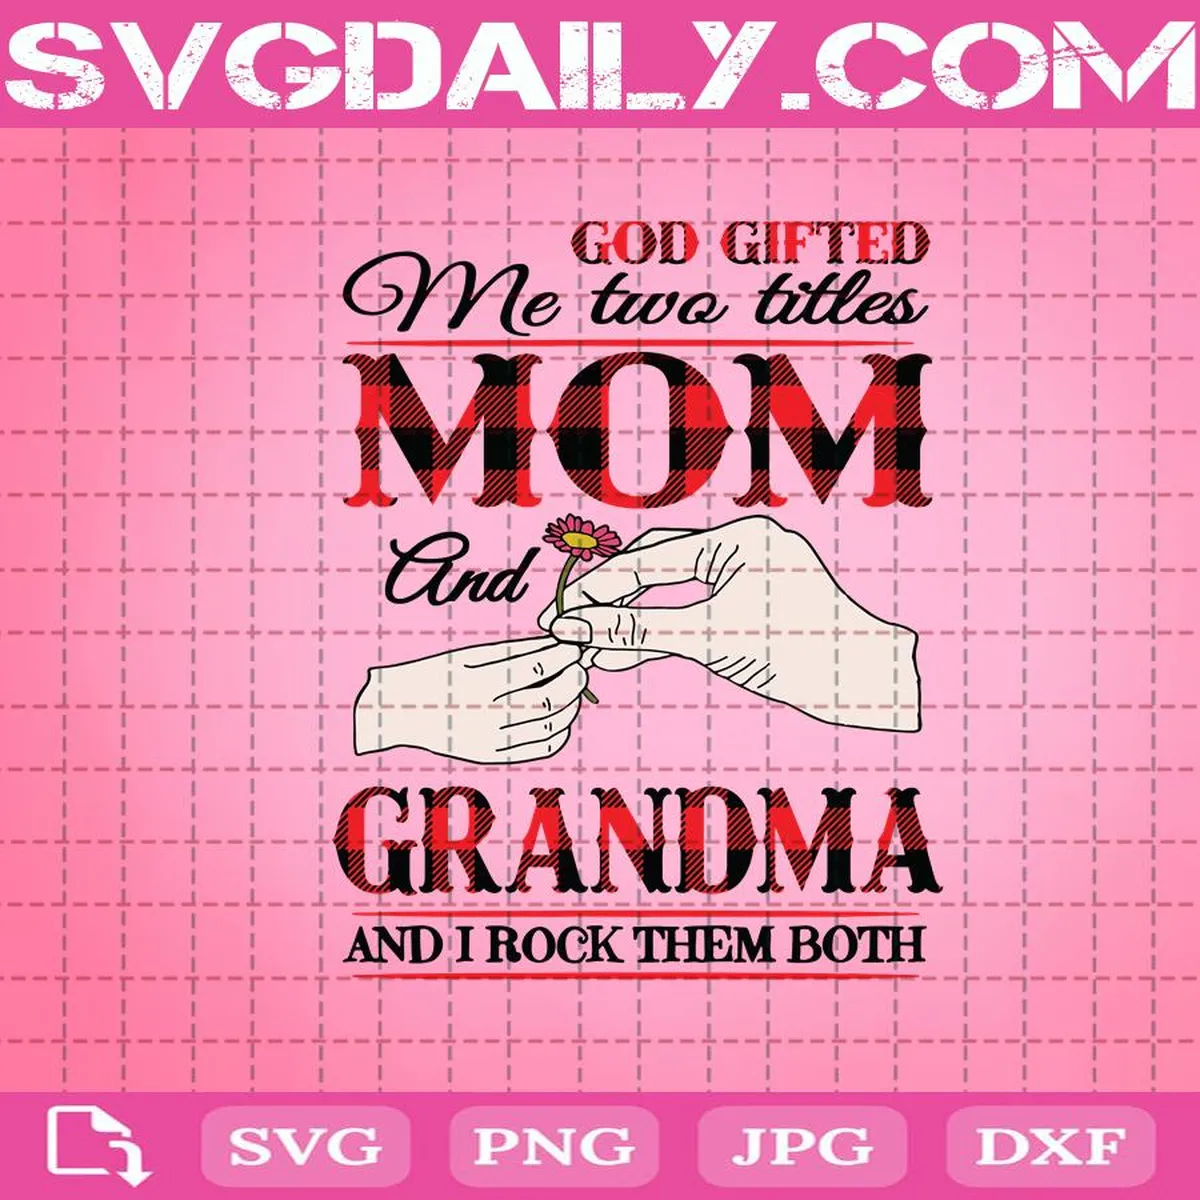 God Gifted Me Two Titles Mom And Grandma And I Rock Them Both Svg, Mom And Grandma Svg, Mom Svg, Mother’s Day Svg, Grandma Svg